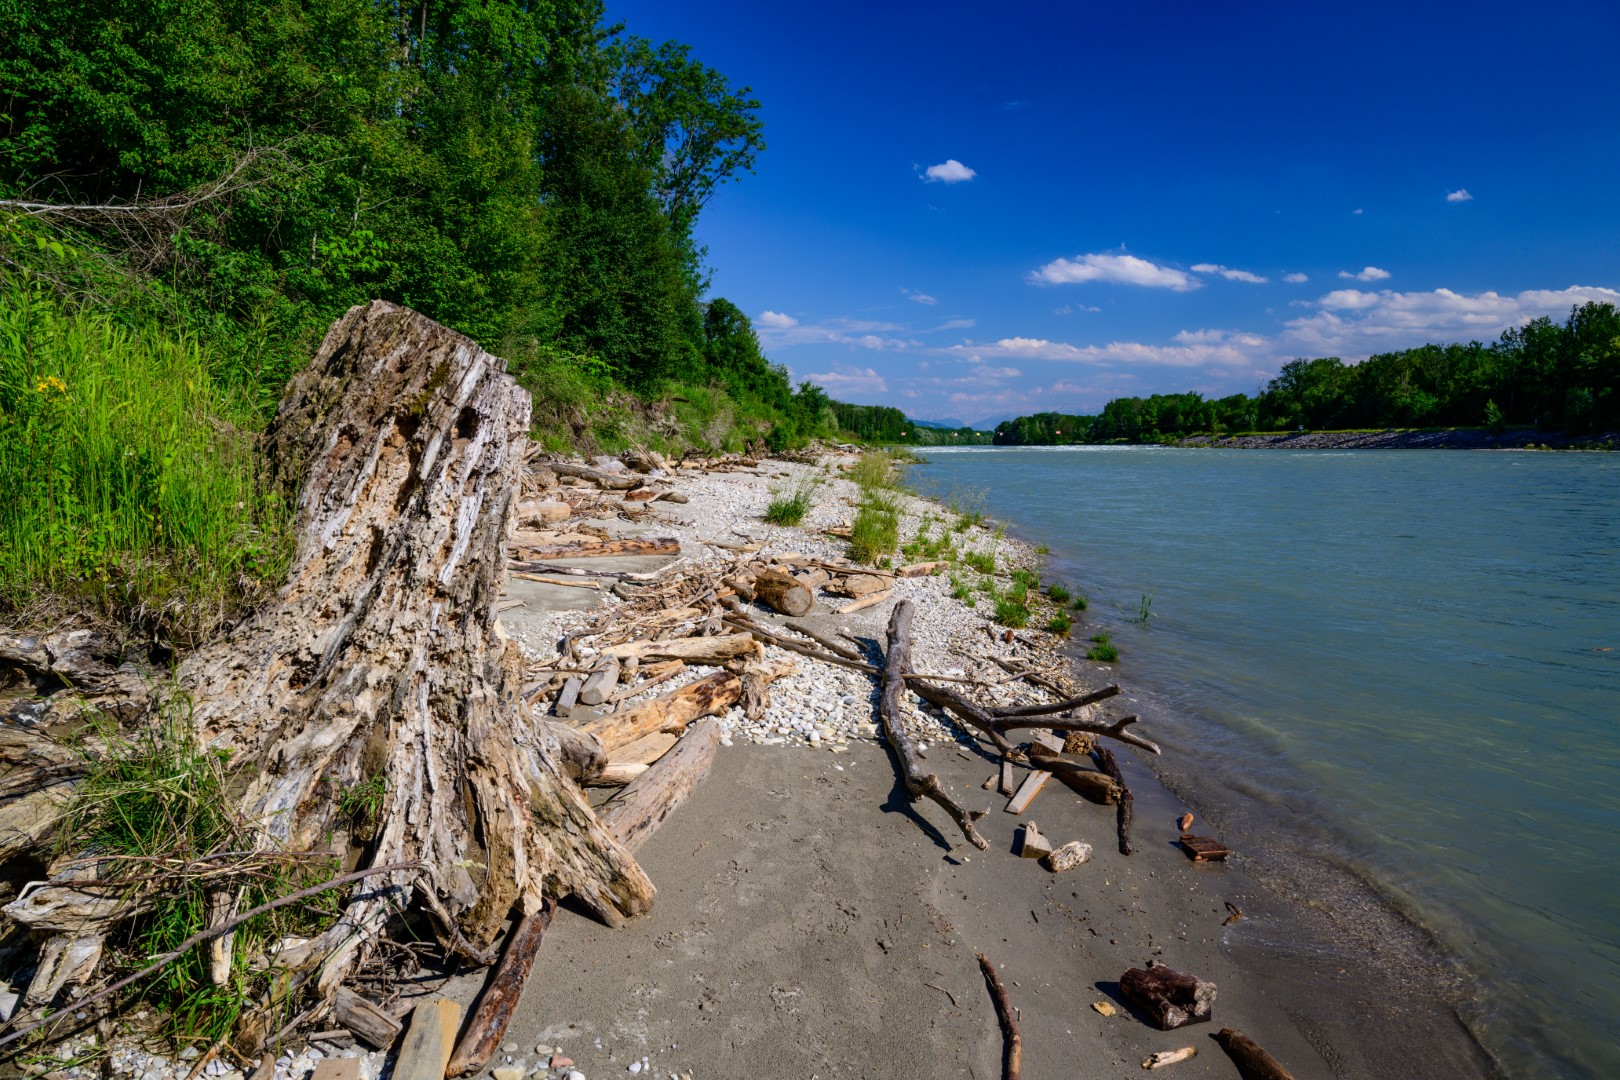 River Restoration Toolbox im Rahmen von LIFELINE Mura Drava Danube